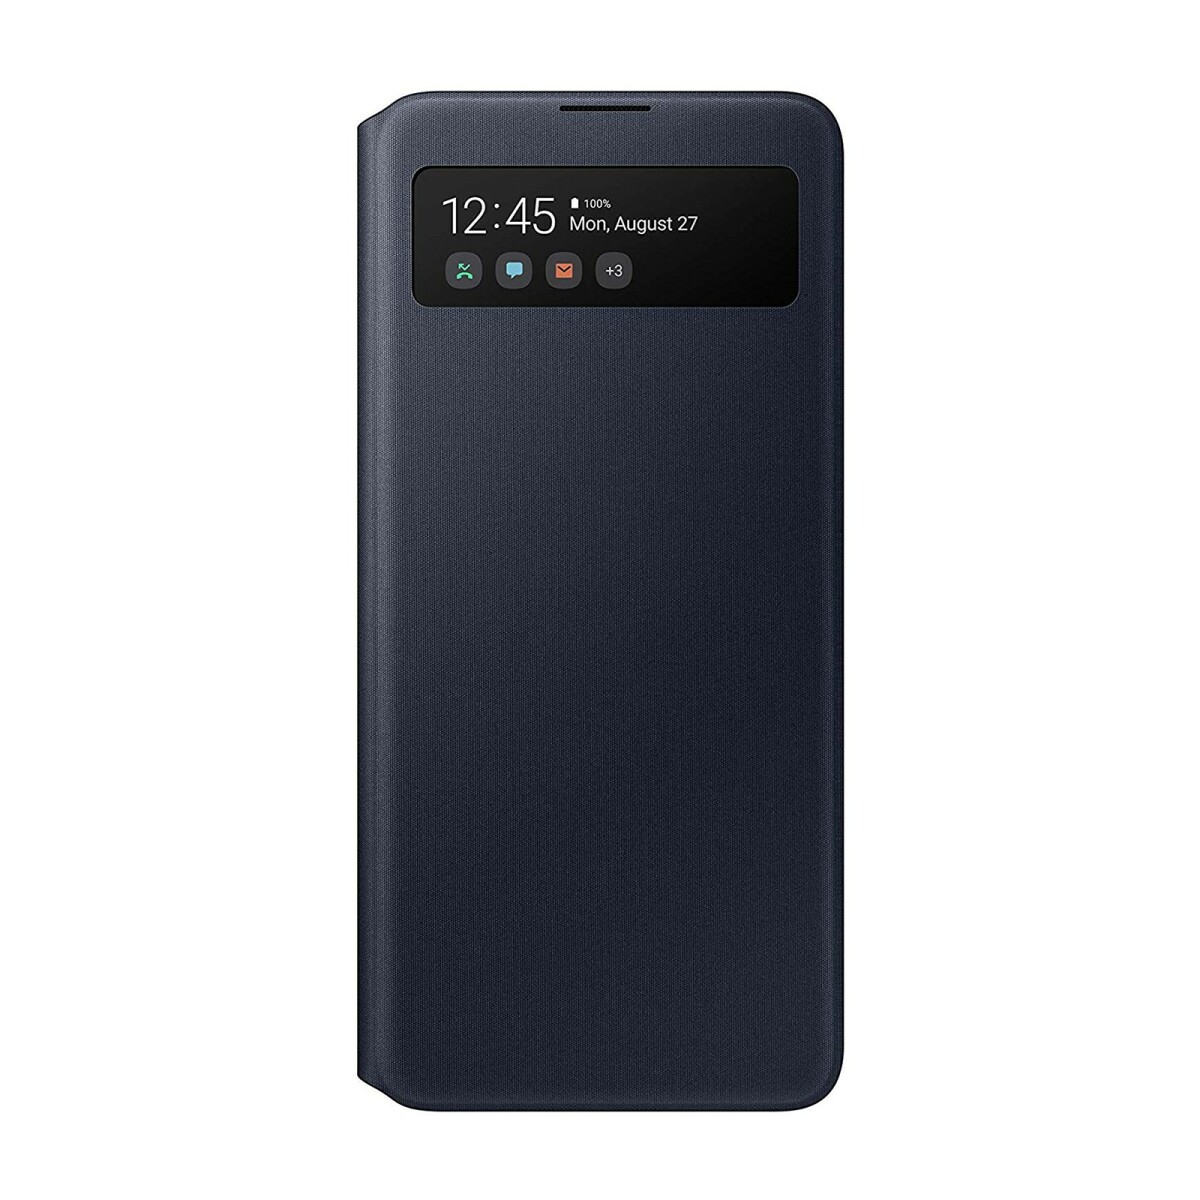 Coque, étui smartphone Samsung Samsung EF-EA515 coque de protection pour téléphones portables 16,5 cm (6.5') Folio porte carte Noir